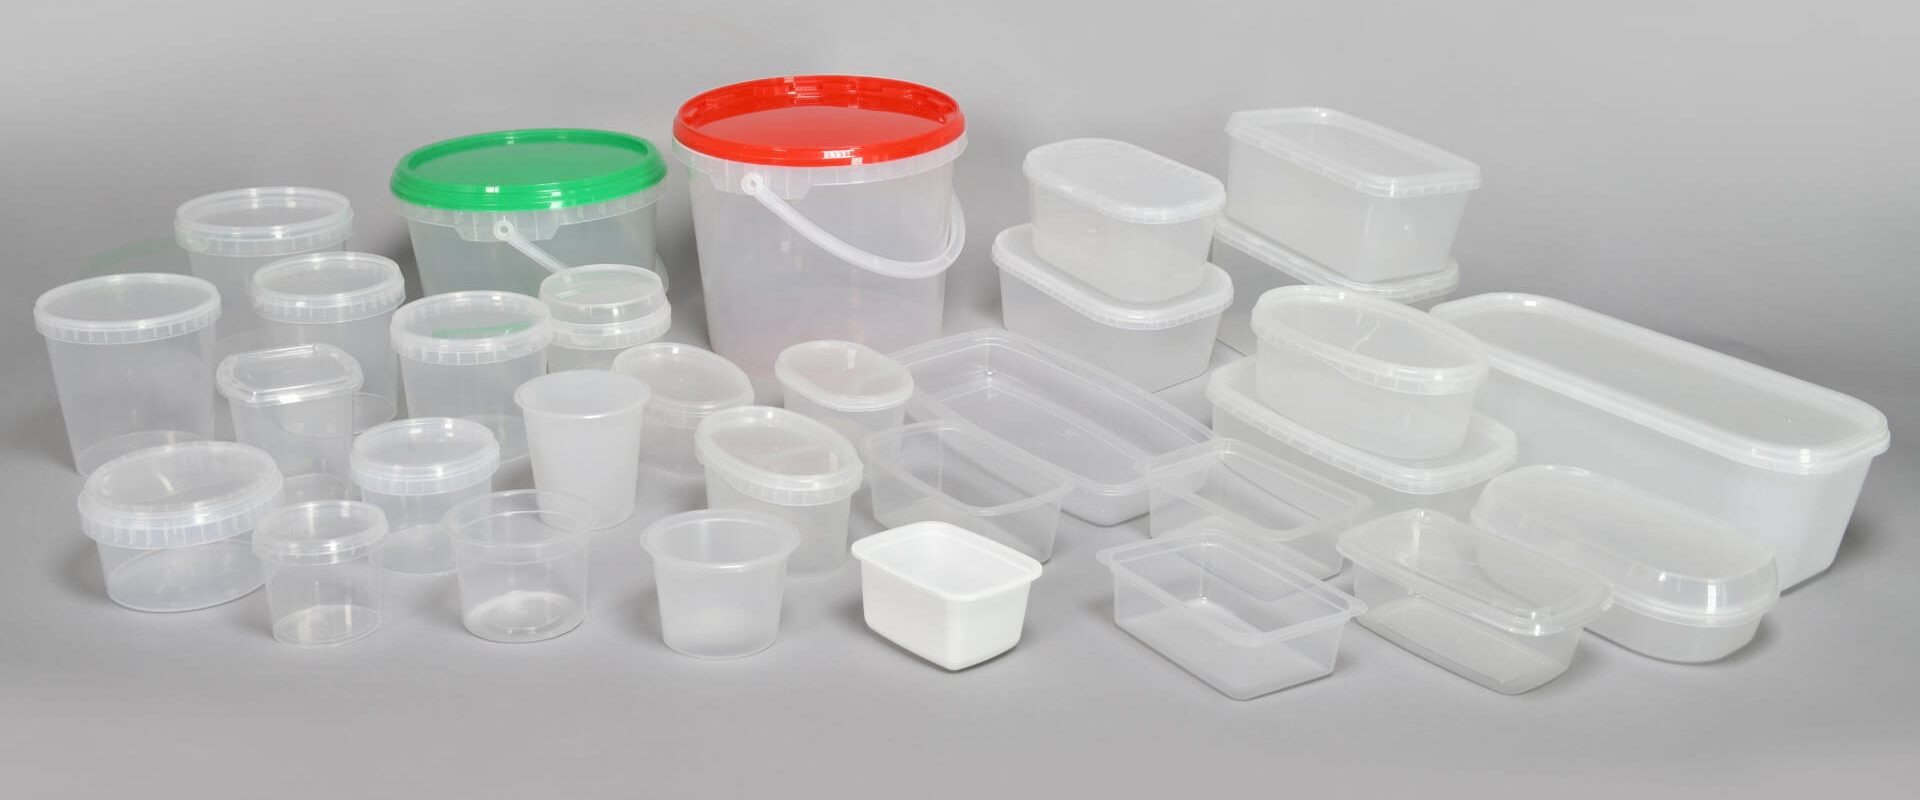 Vari imballaggi plastica Resaplast